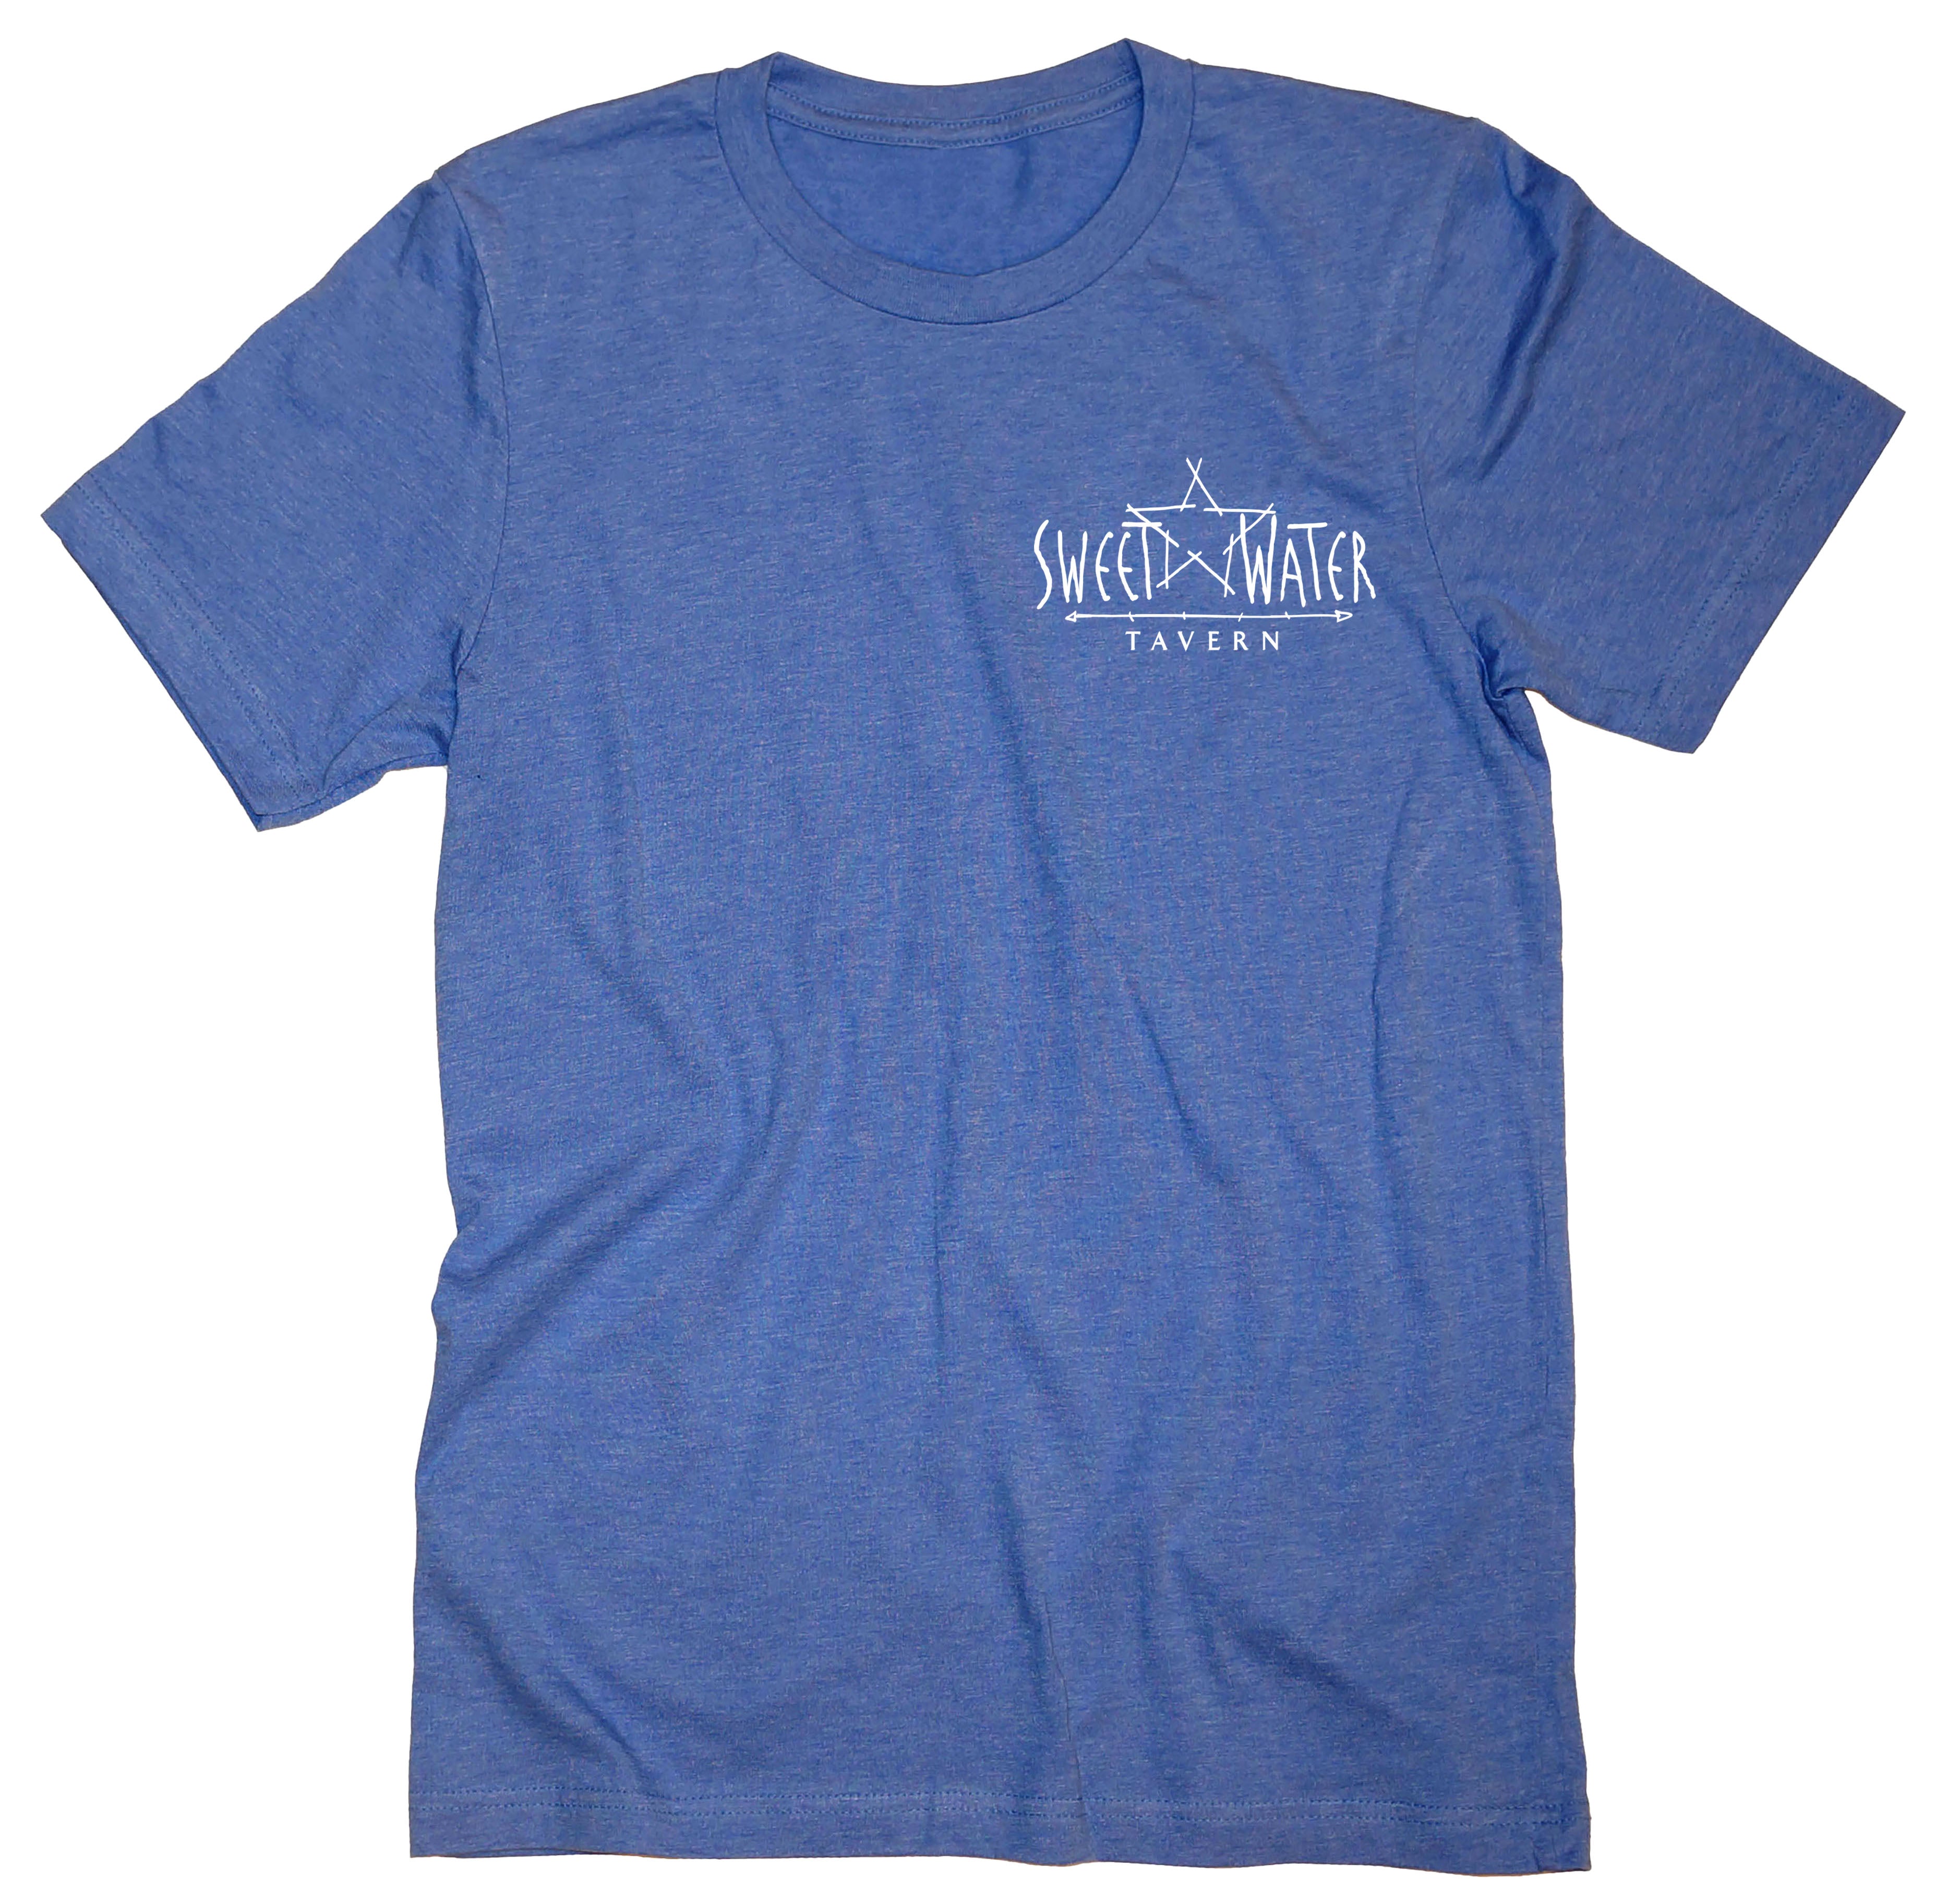 Sweetwater Logo T-shirt - Blue - Large